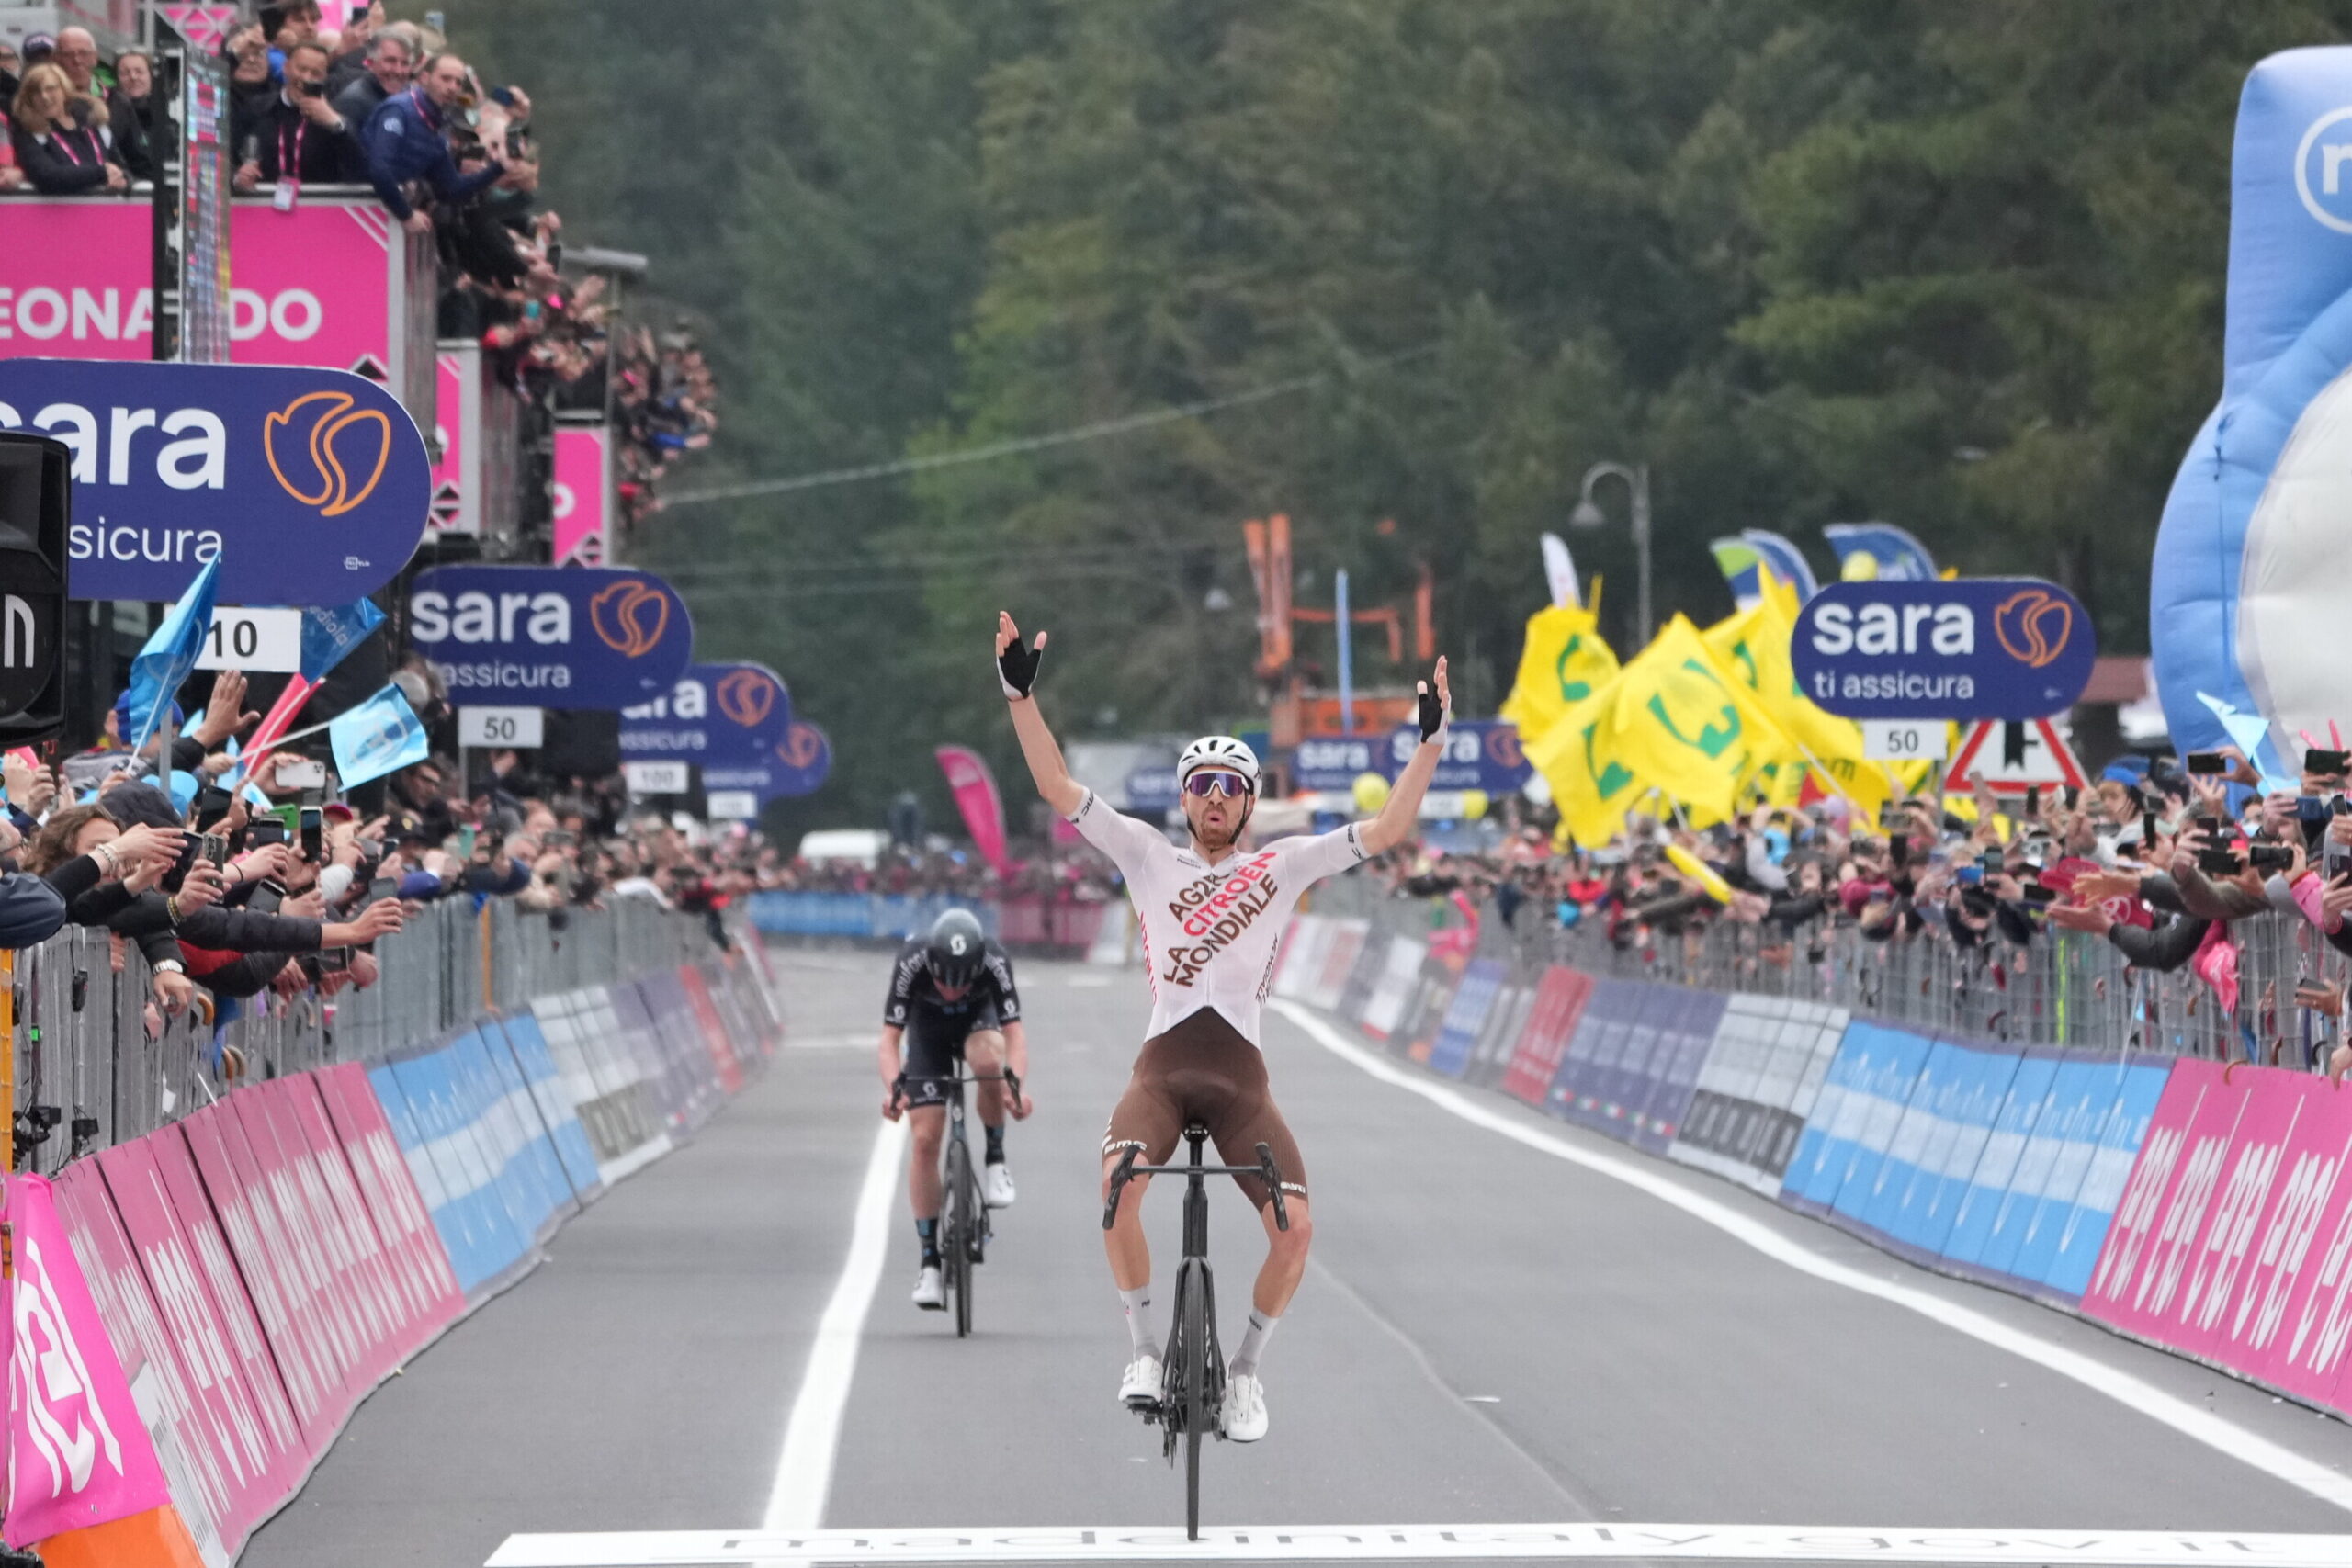 fonte immagine: Twitter ufficiale Giro d'Italia